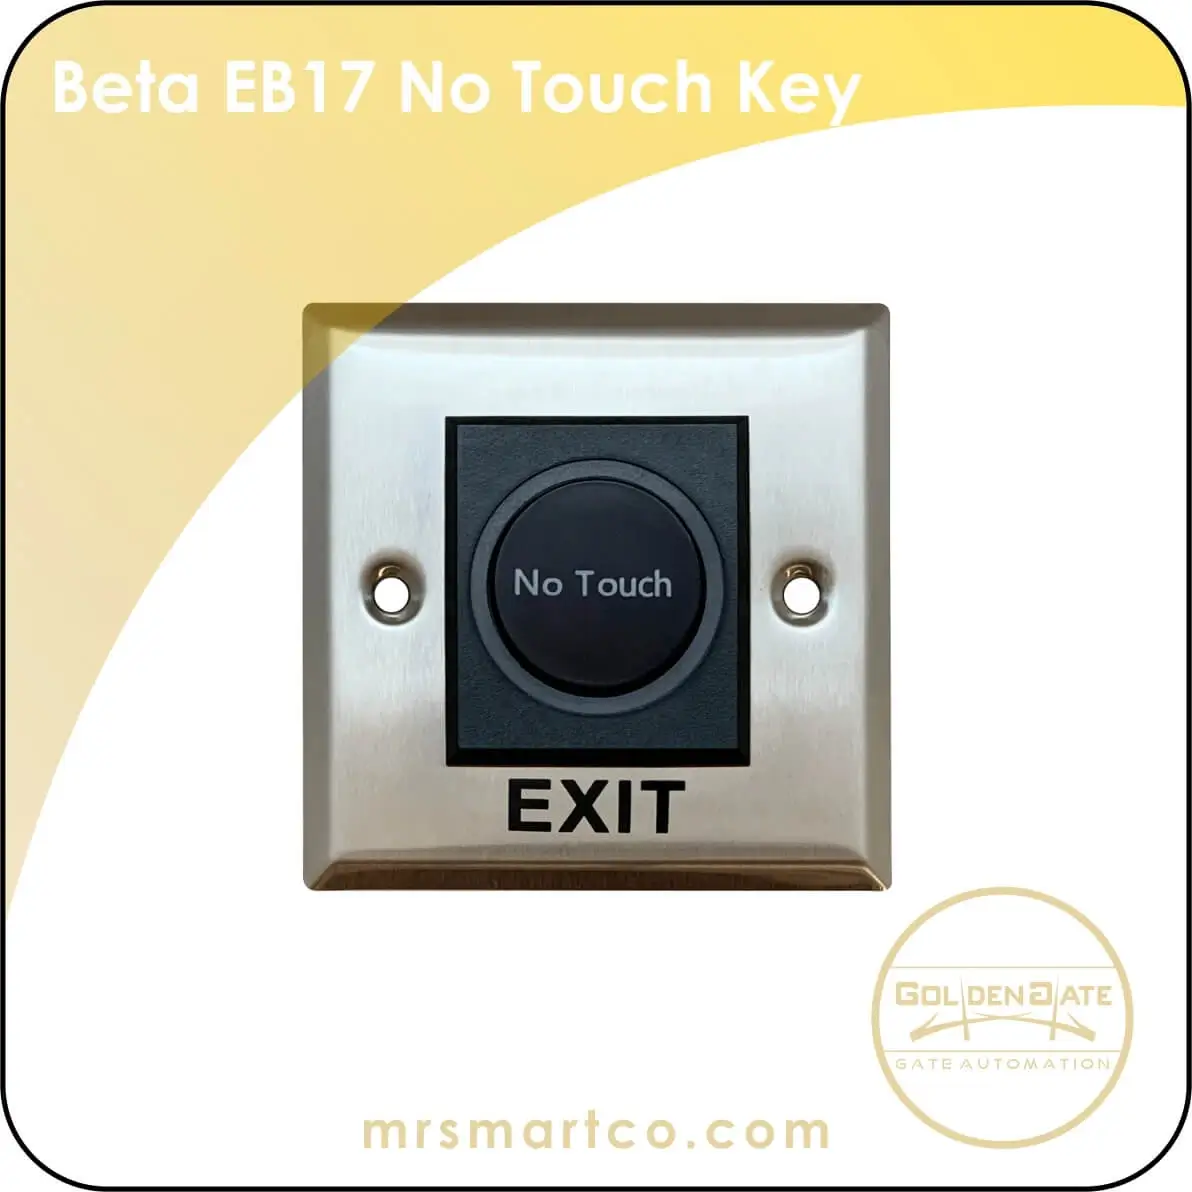 Beta EB17 No Touch Key